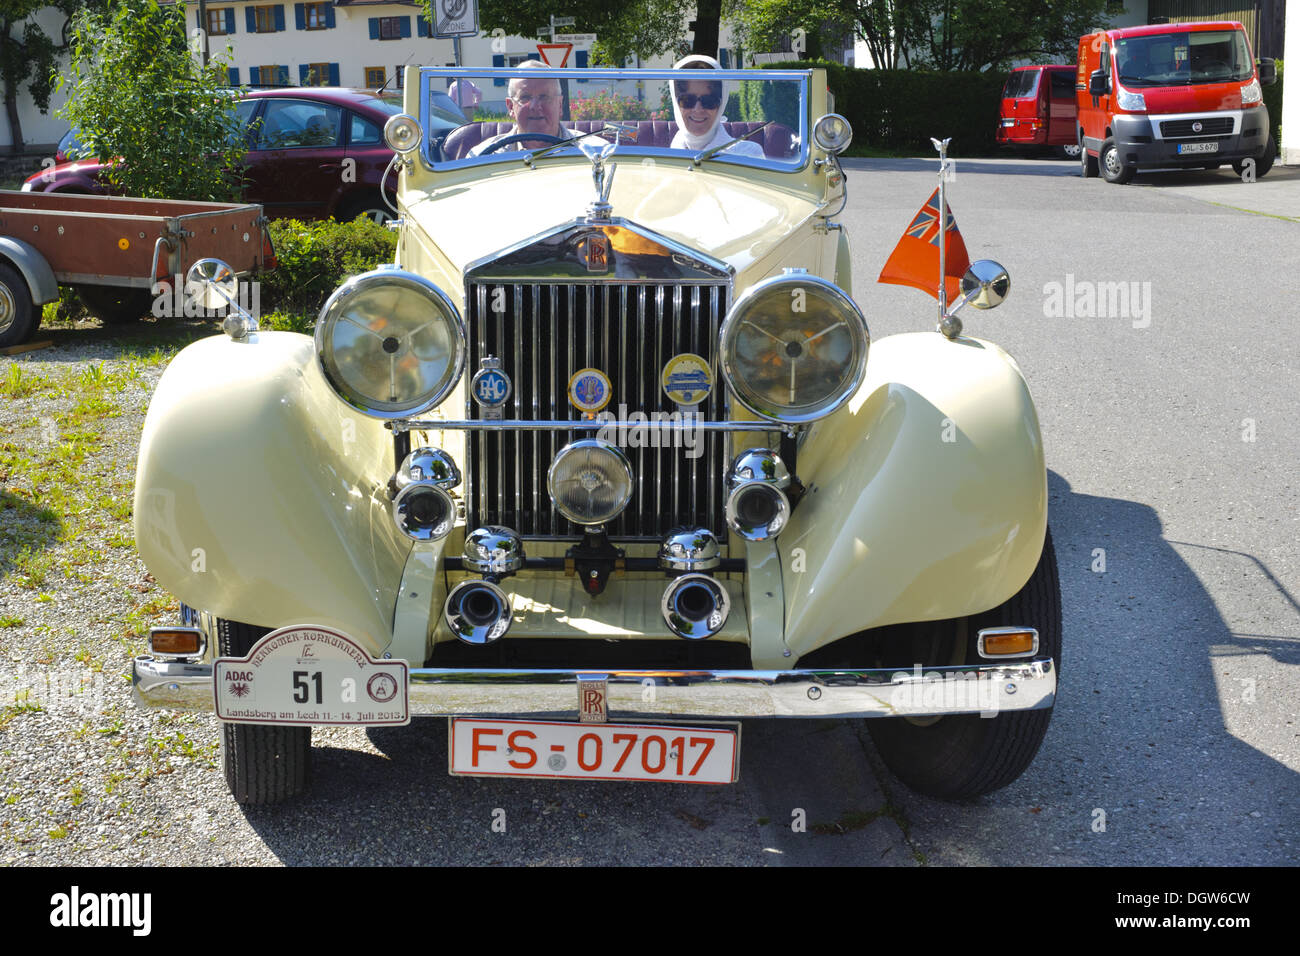 oldtimer car Rolls Royce Cabriolet Stock Photo